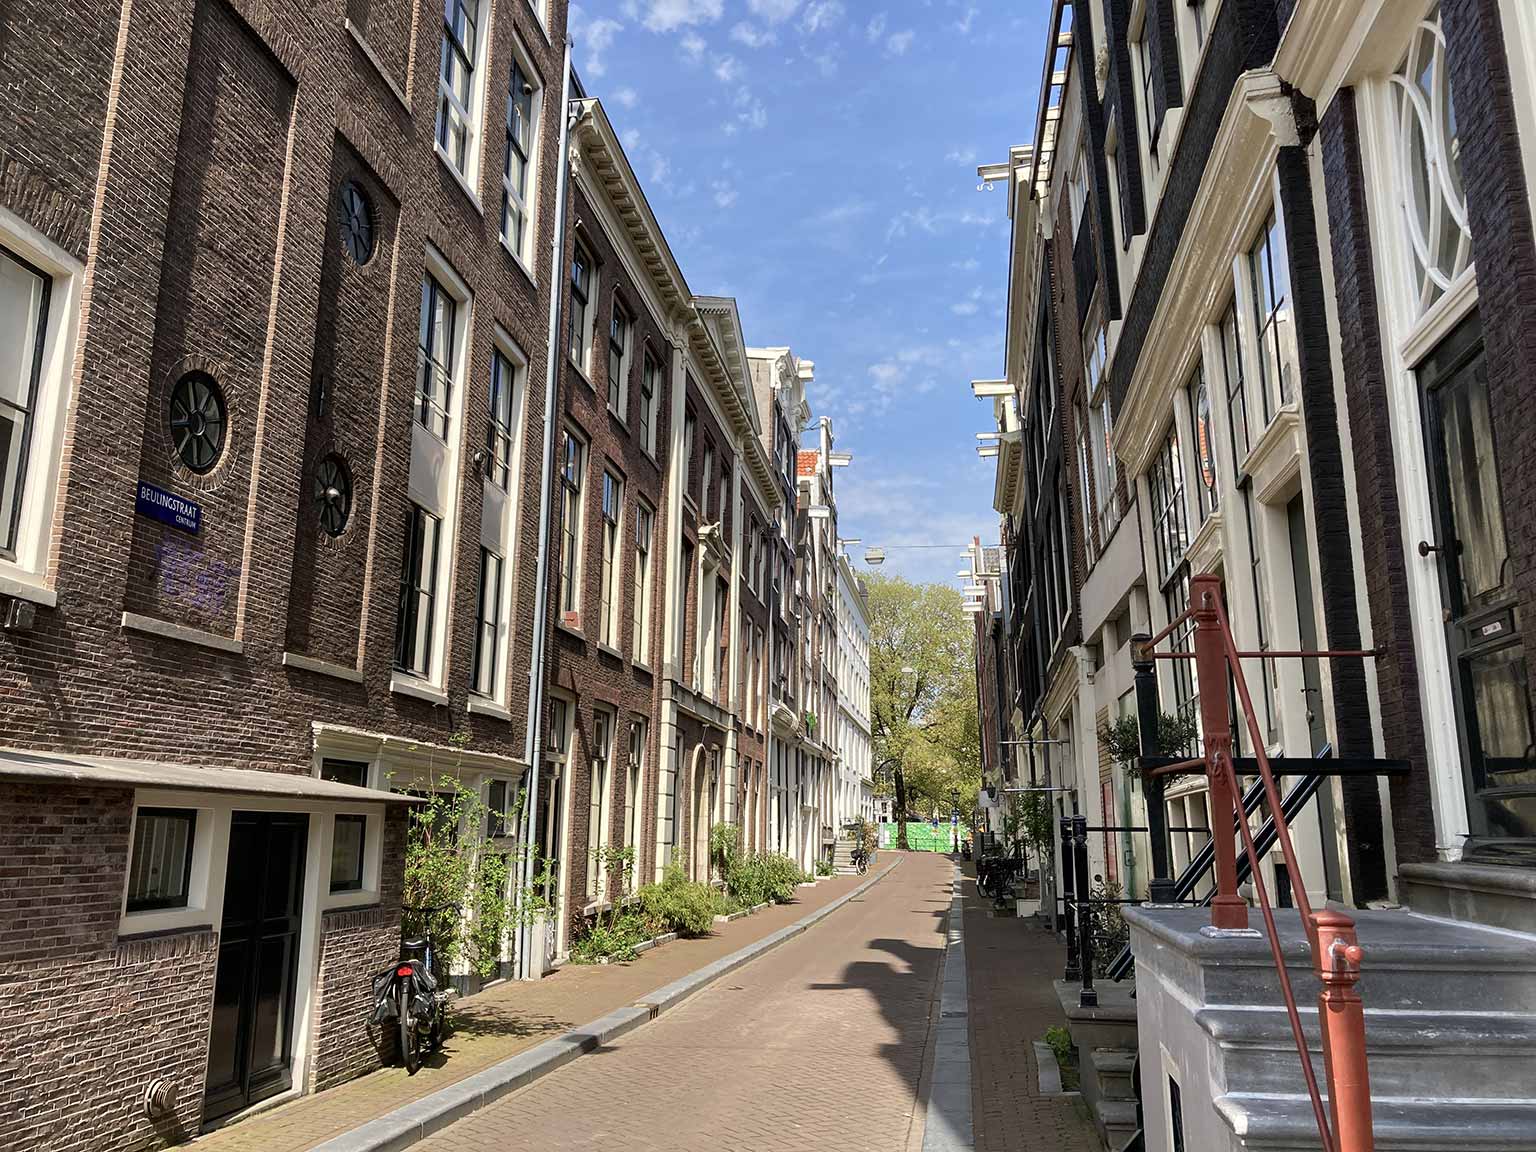 Beulingstraat, Amsterdam, seen from the Herengracht towards the Singel